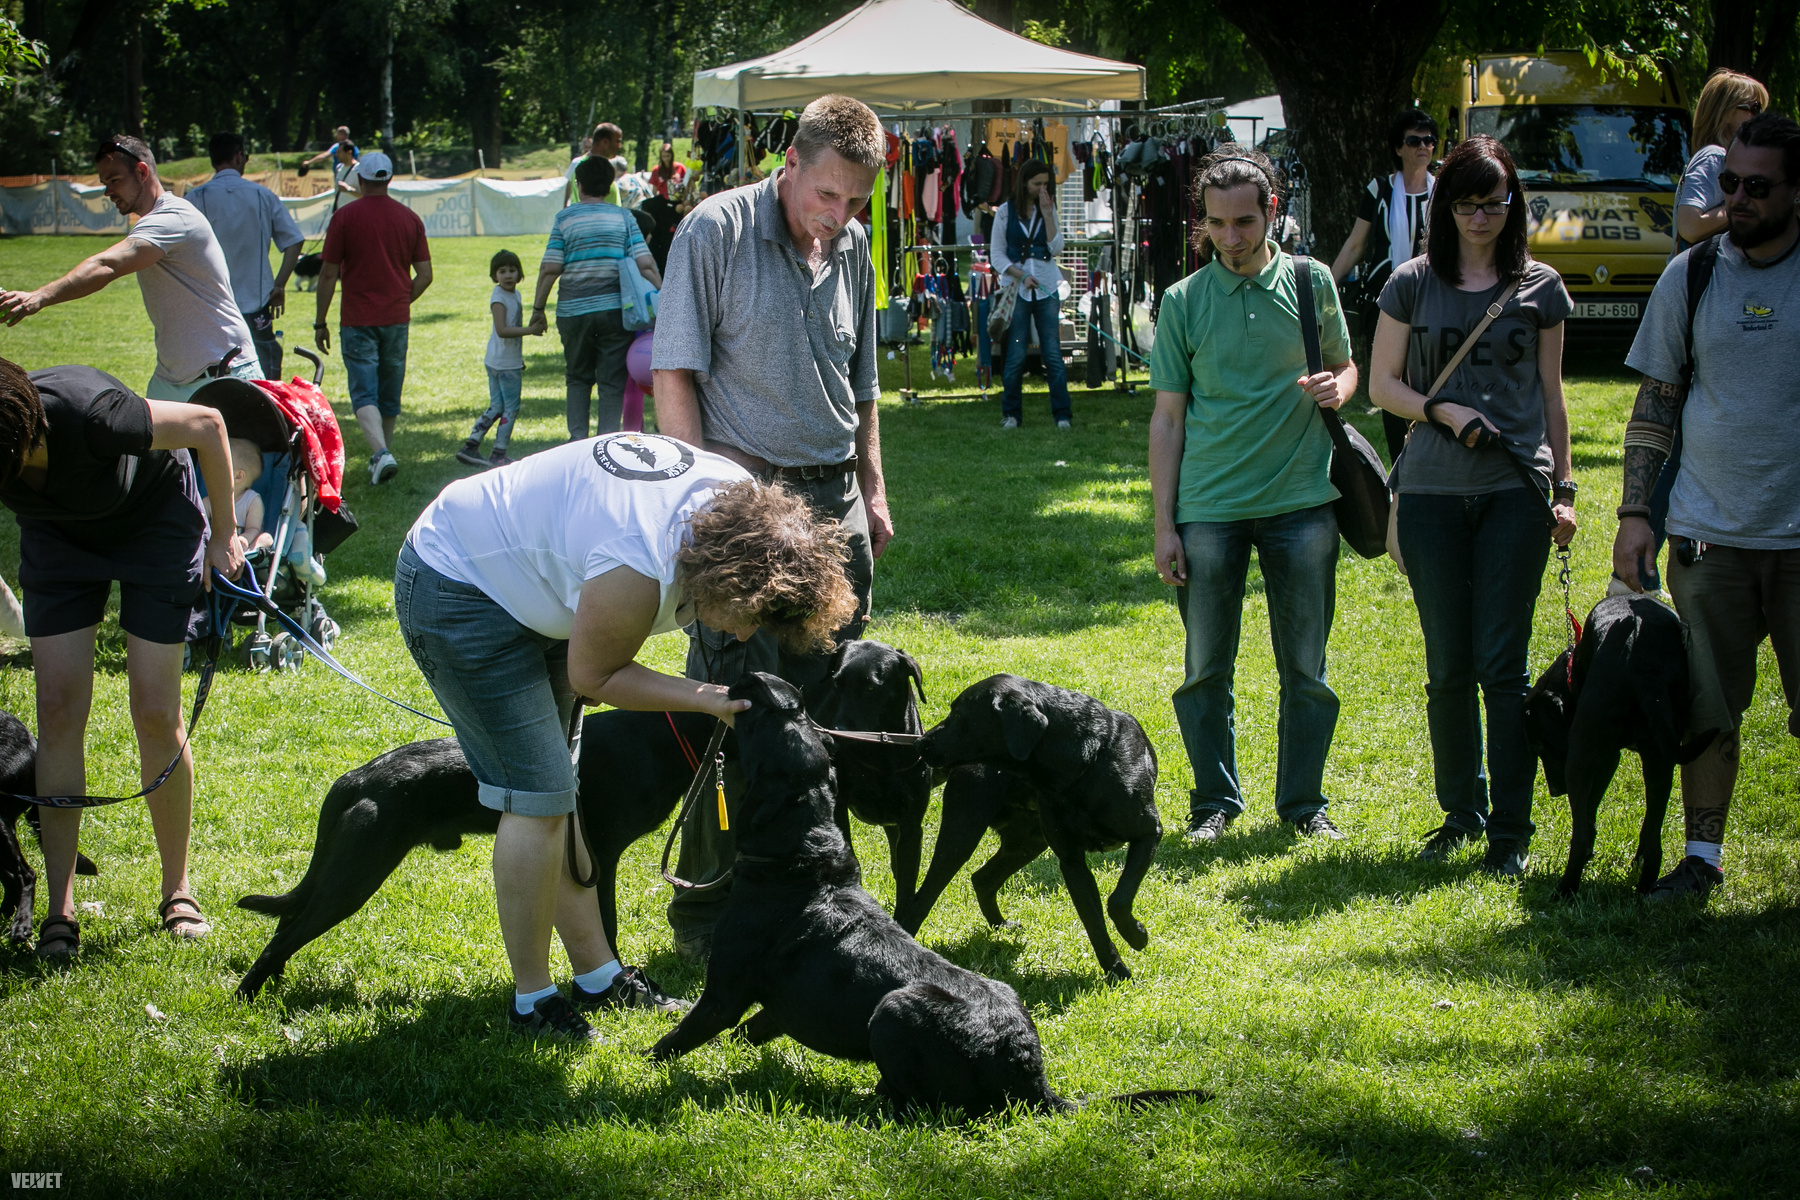 Dog Chow Kutyasport Majális (Budapest, 2015. május 30.)